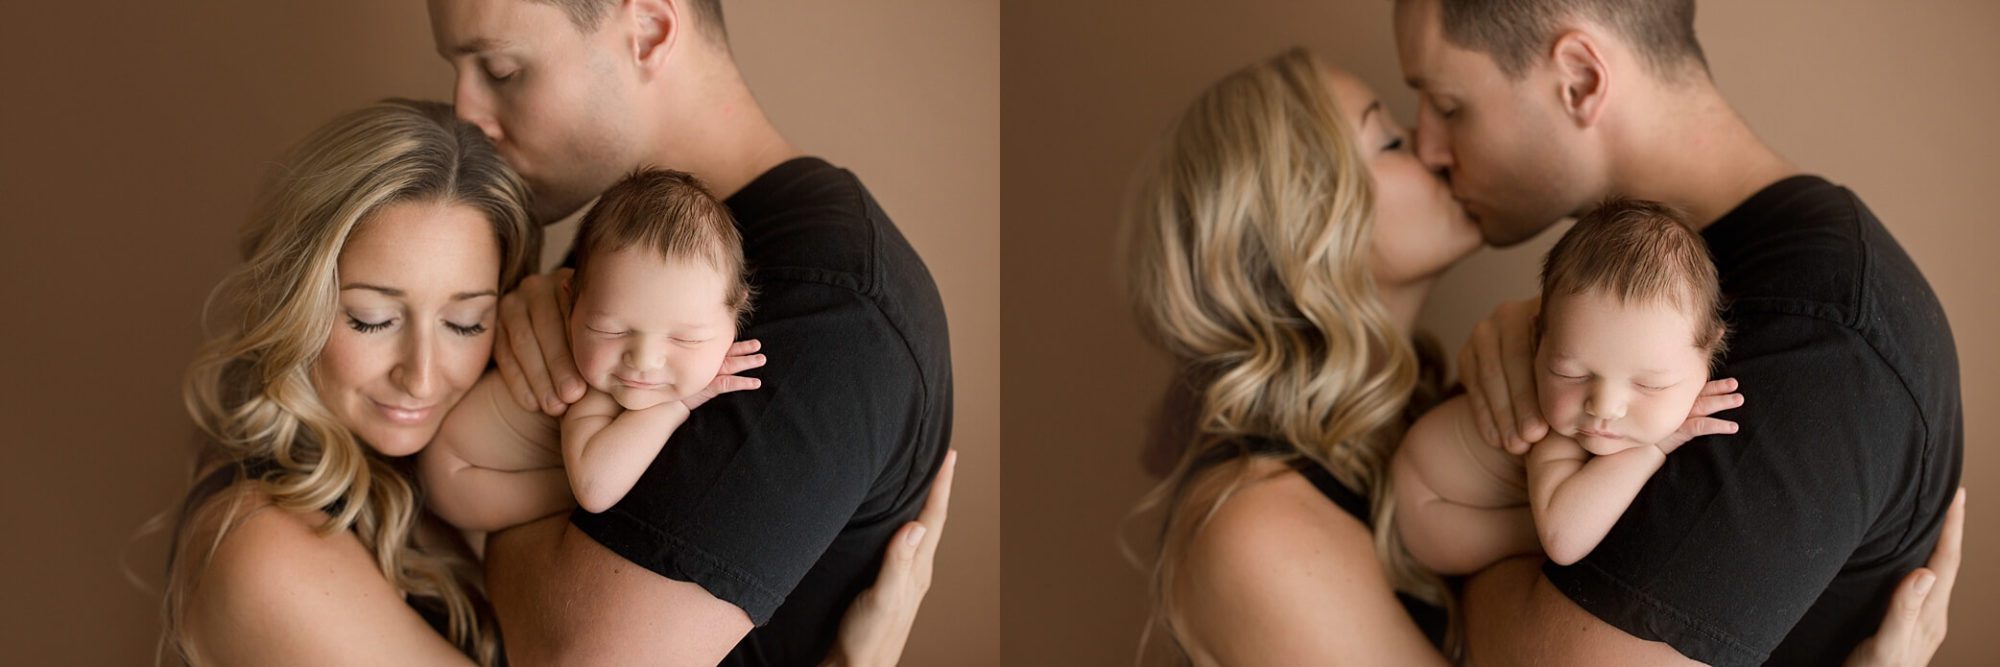 newborn photographer tacoma | baby boy photography seattle